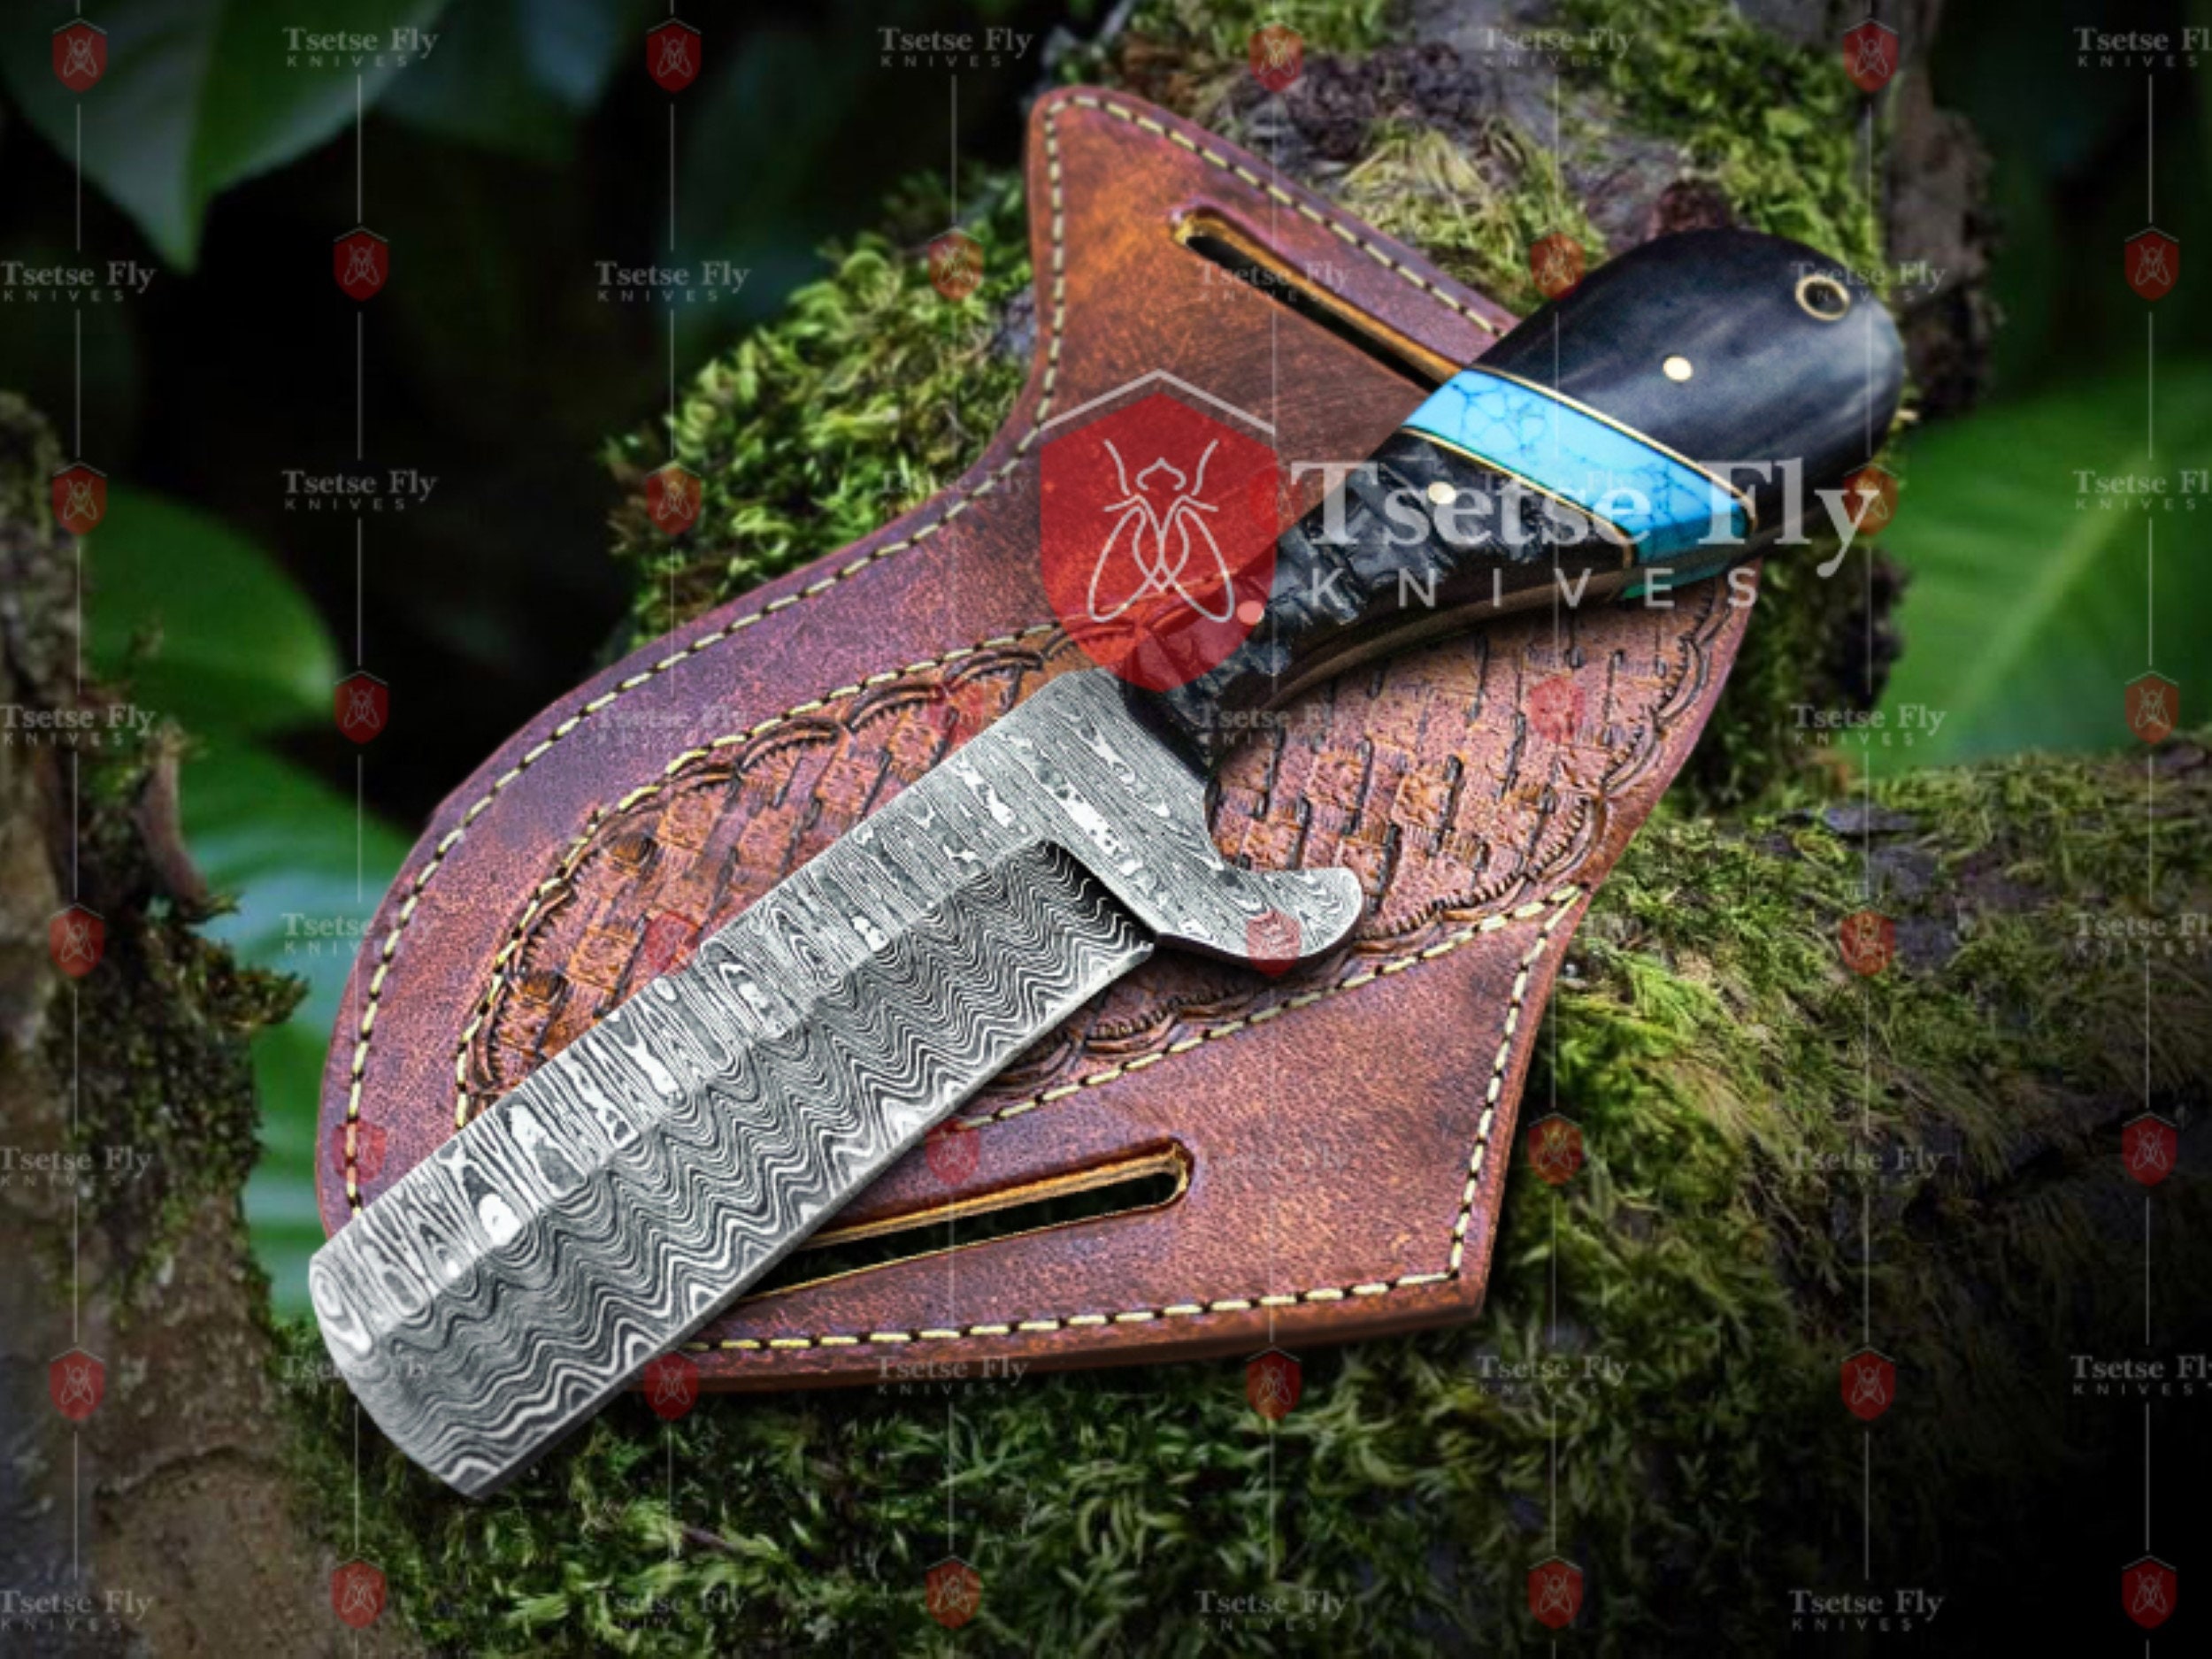 4.5″ Damascus Knife with Scrimshaw Buffalo Bone Handle and Nice Filework